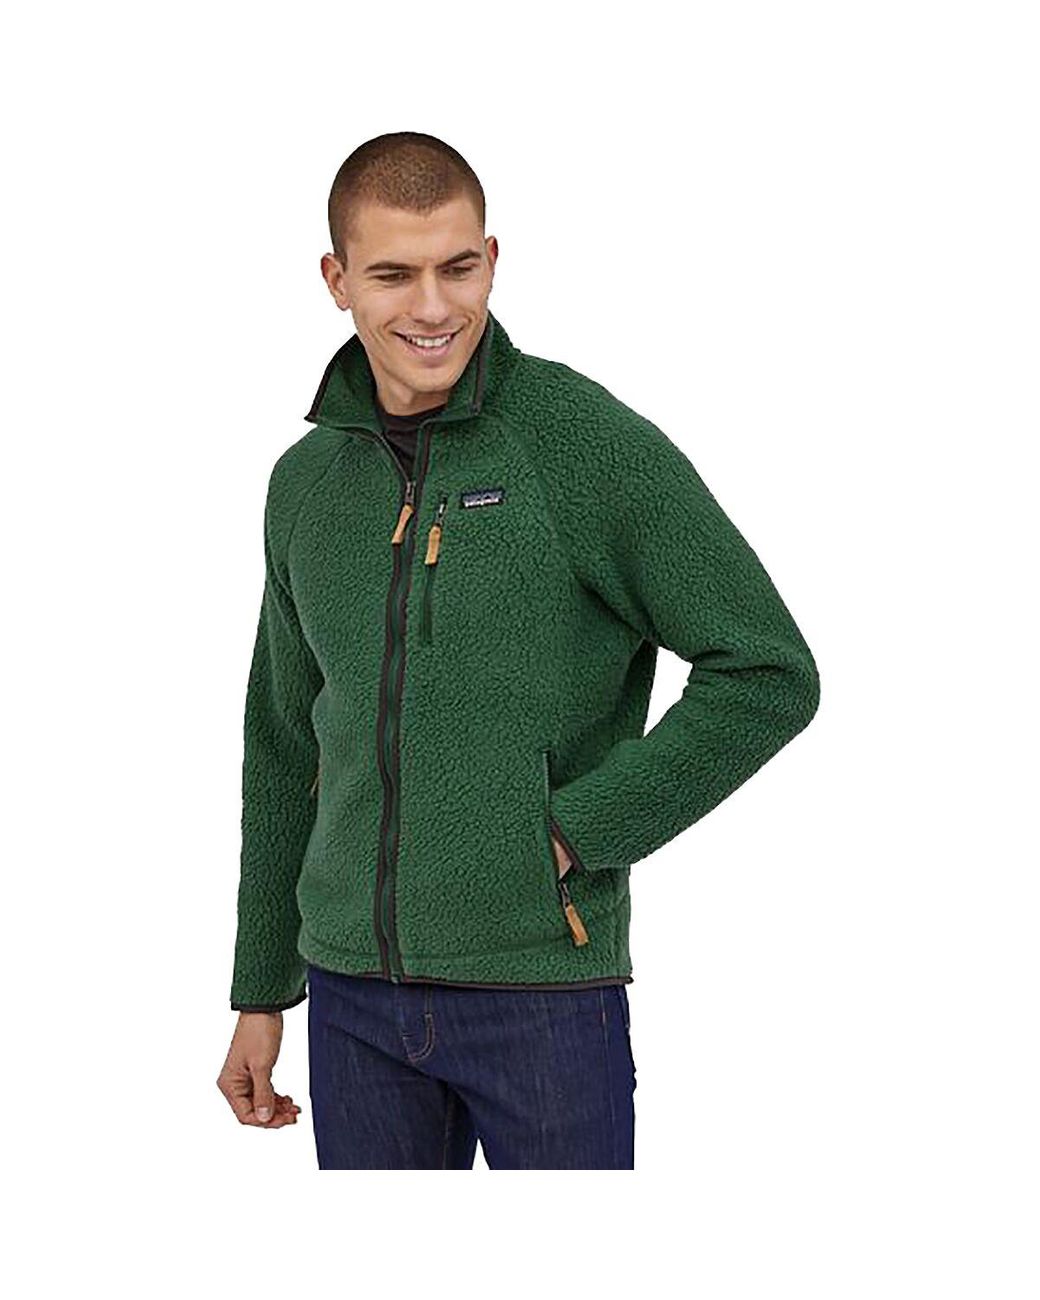 Patagonia Fleece Retro Pile Jacket in Green for Men - Lyst